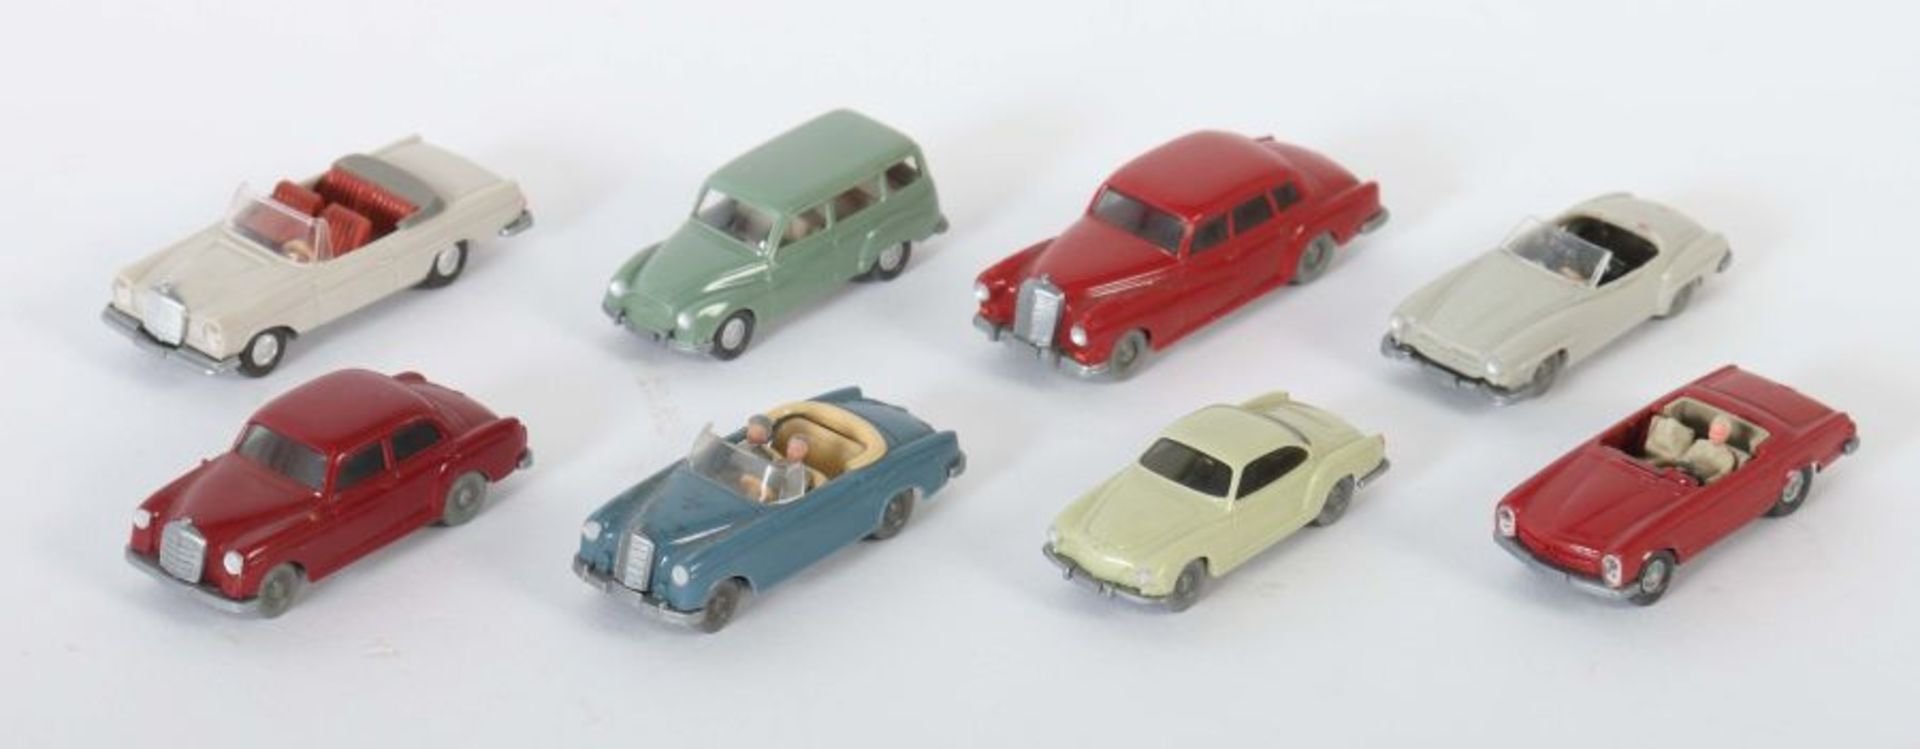 8 PKW Wiking, 1:87, 1960-70er Jahre, 1 x 306 VW Karman Ghia, hellgraugrün?; 1 x 364 DKW Universal,